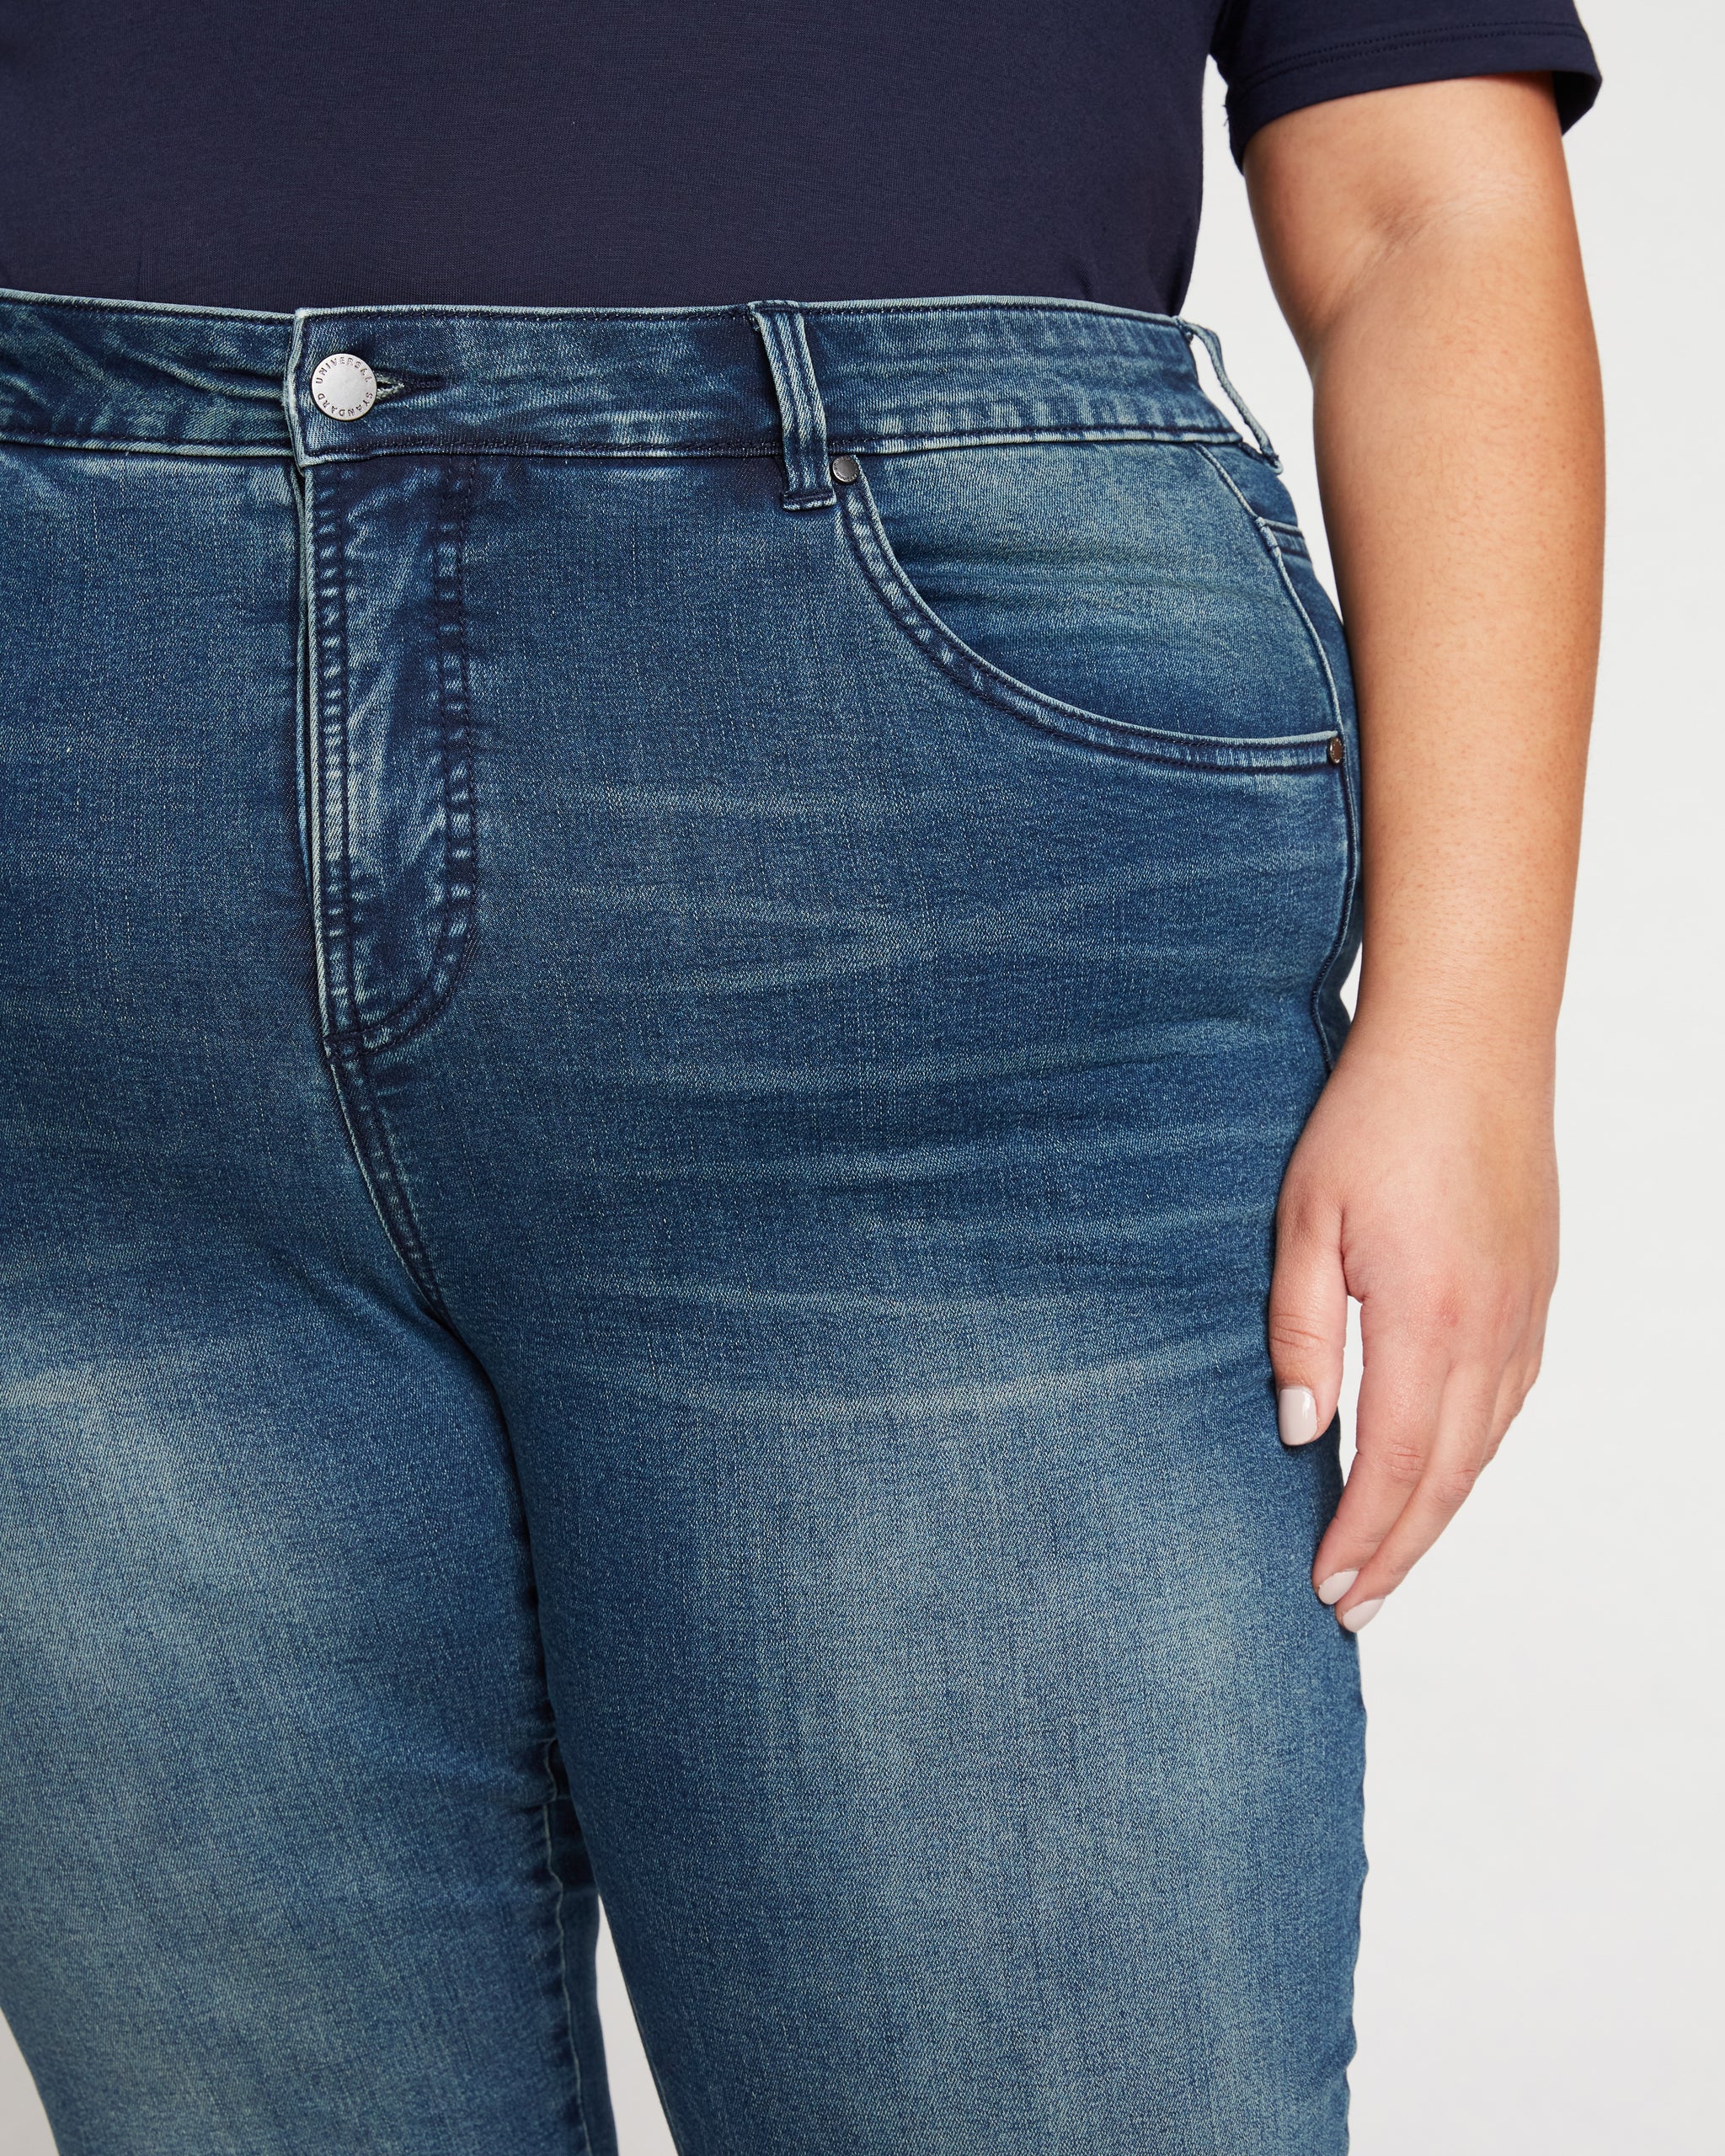 Seine High Rise Jeans 32 Inch - Distressed | Standard